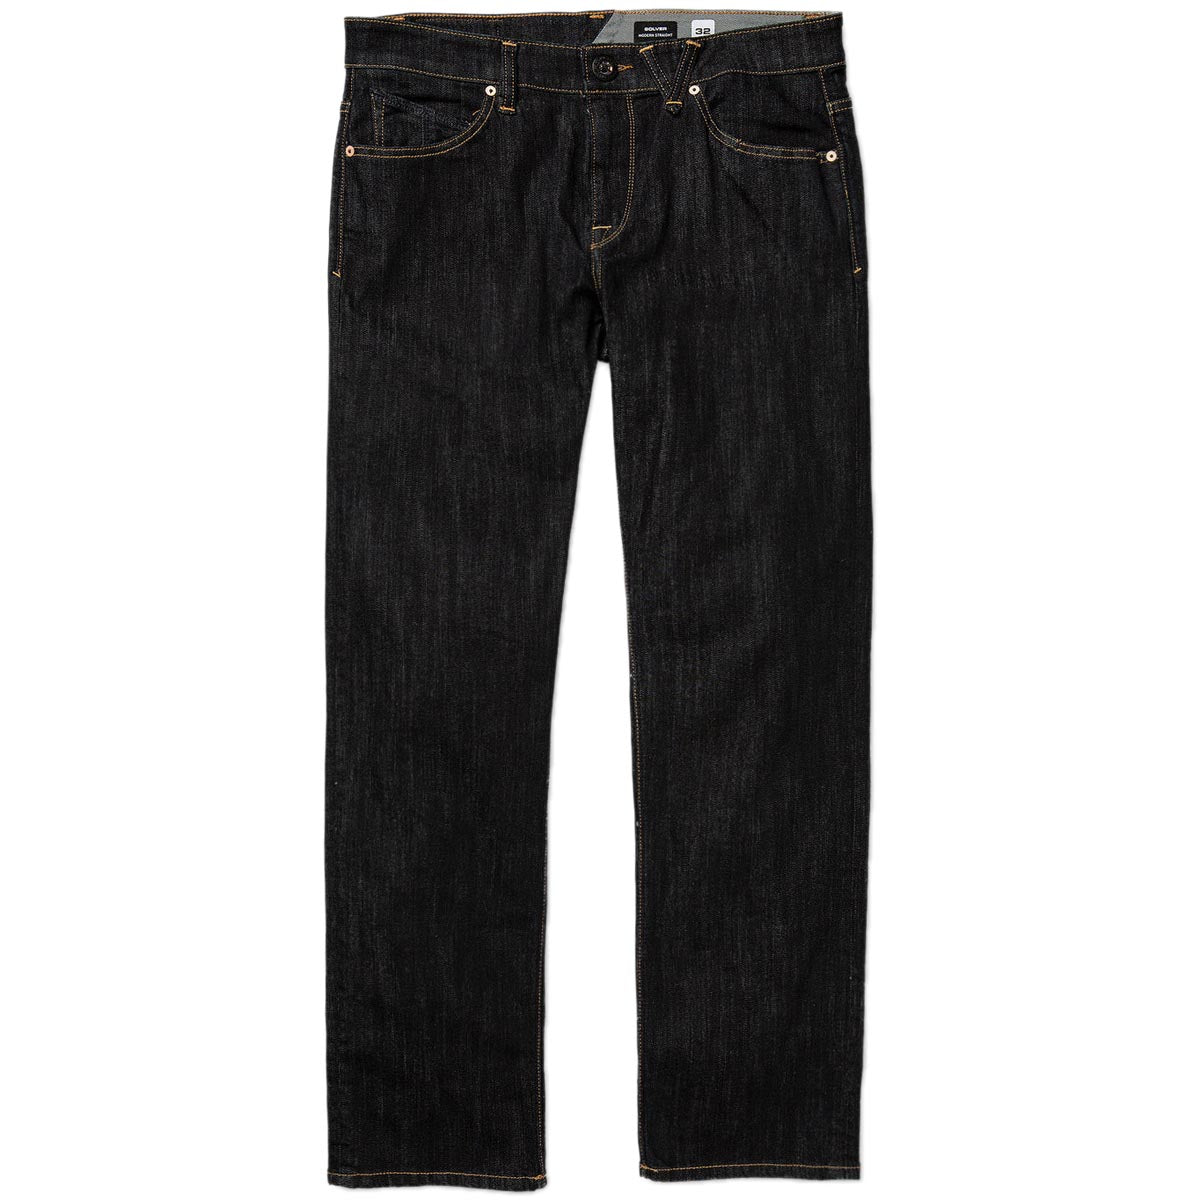 Volcom Solver Denim Jeans - Rinse image 1